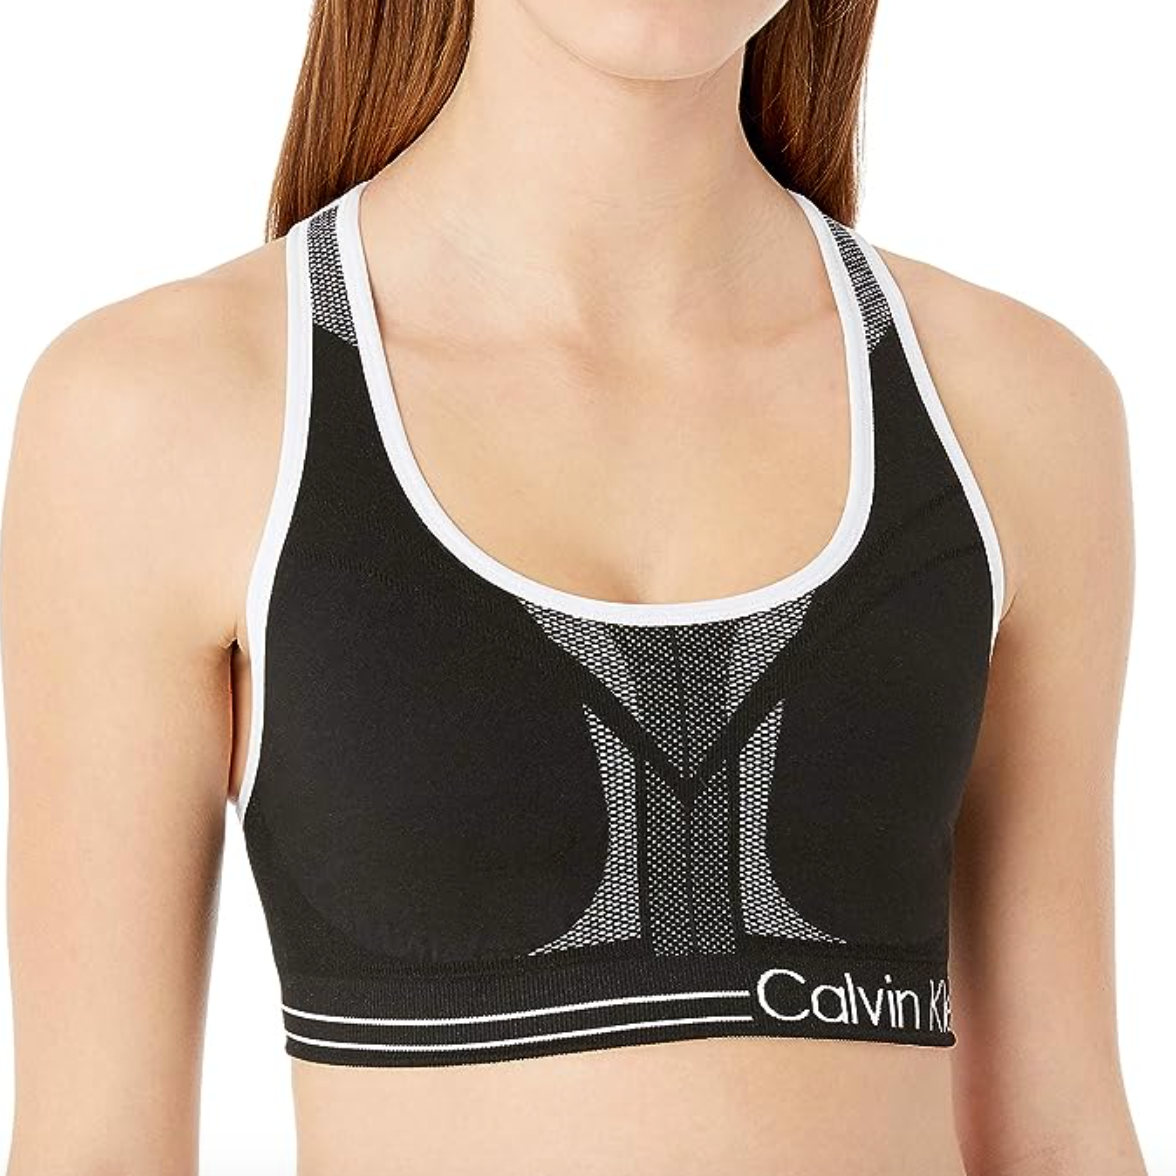 Buy Women's Underwear Calvin Klein at affordable prices — free